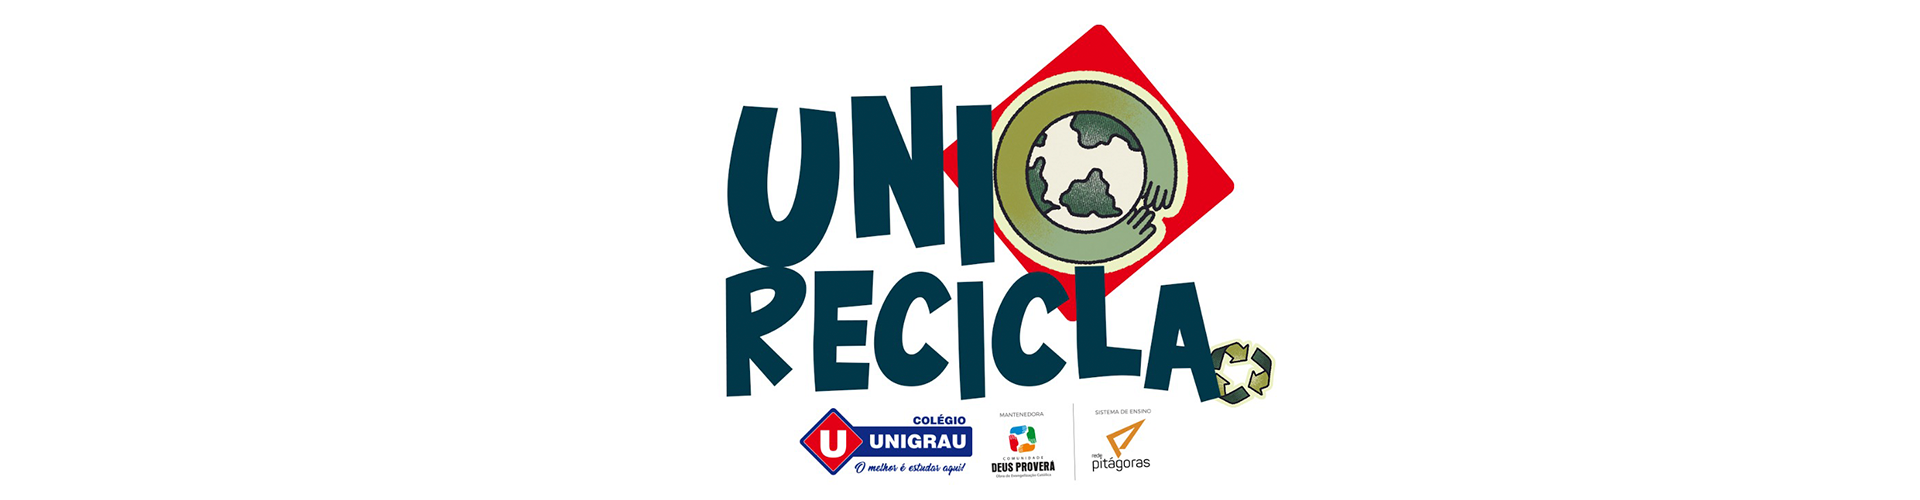 UniRecicla